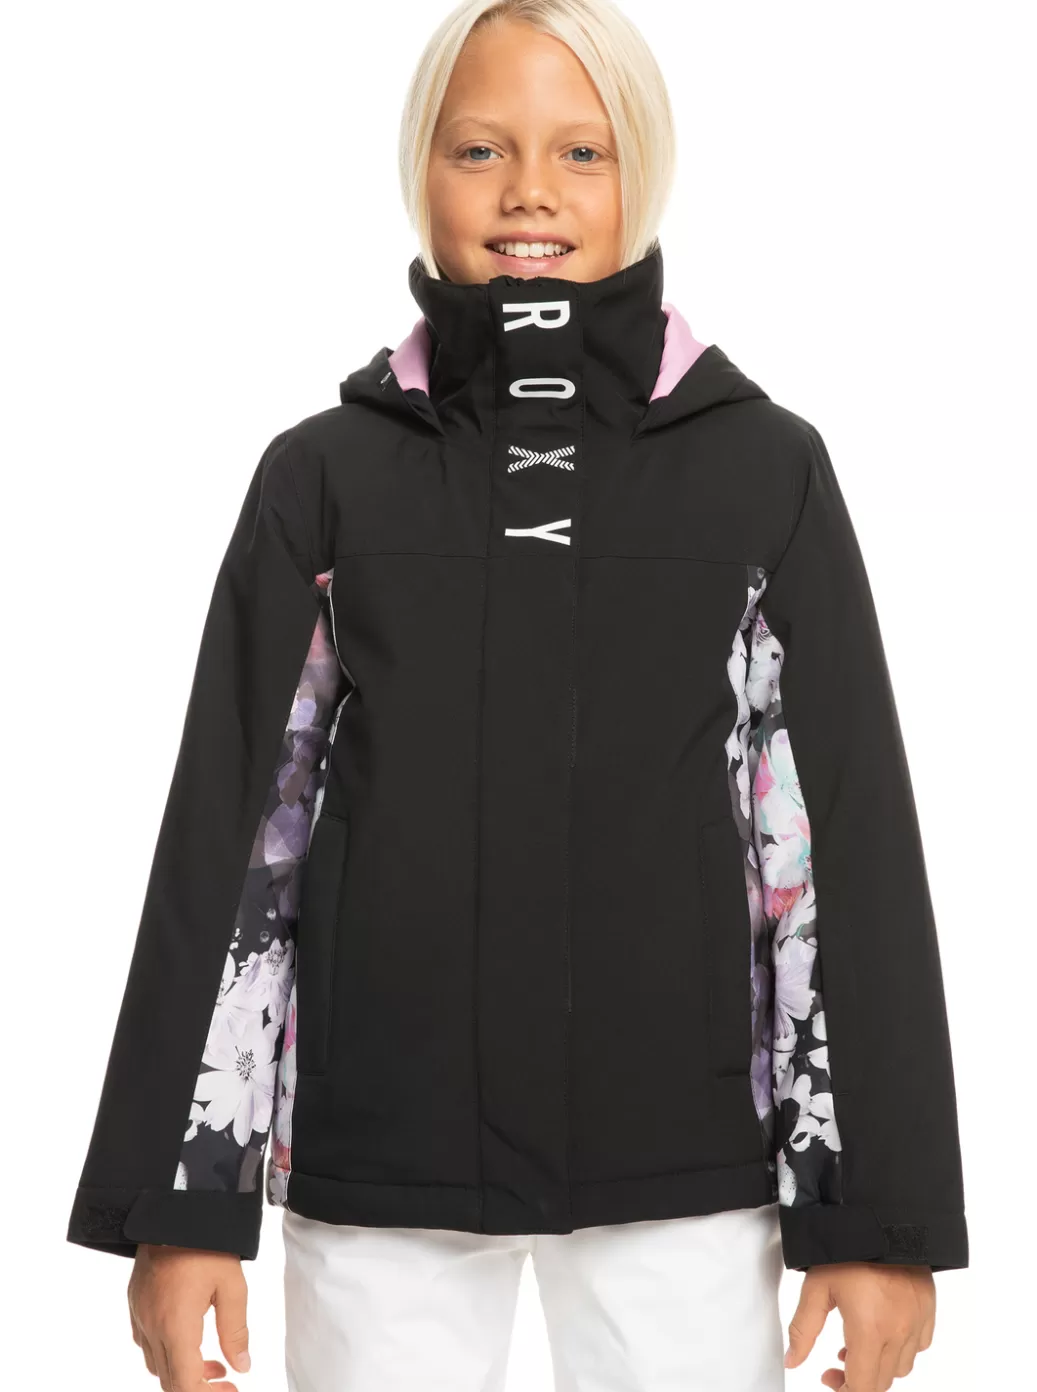 Snow Jackets | Girls Snow | KIDS | WOMEN ROXY Girl's 4-16 Galaxy Technical Snow Jacket True Black Blurry Flower